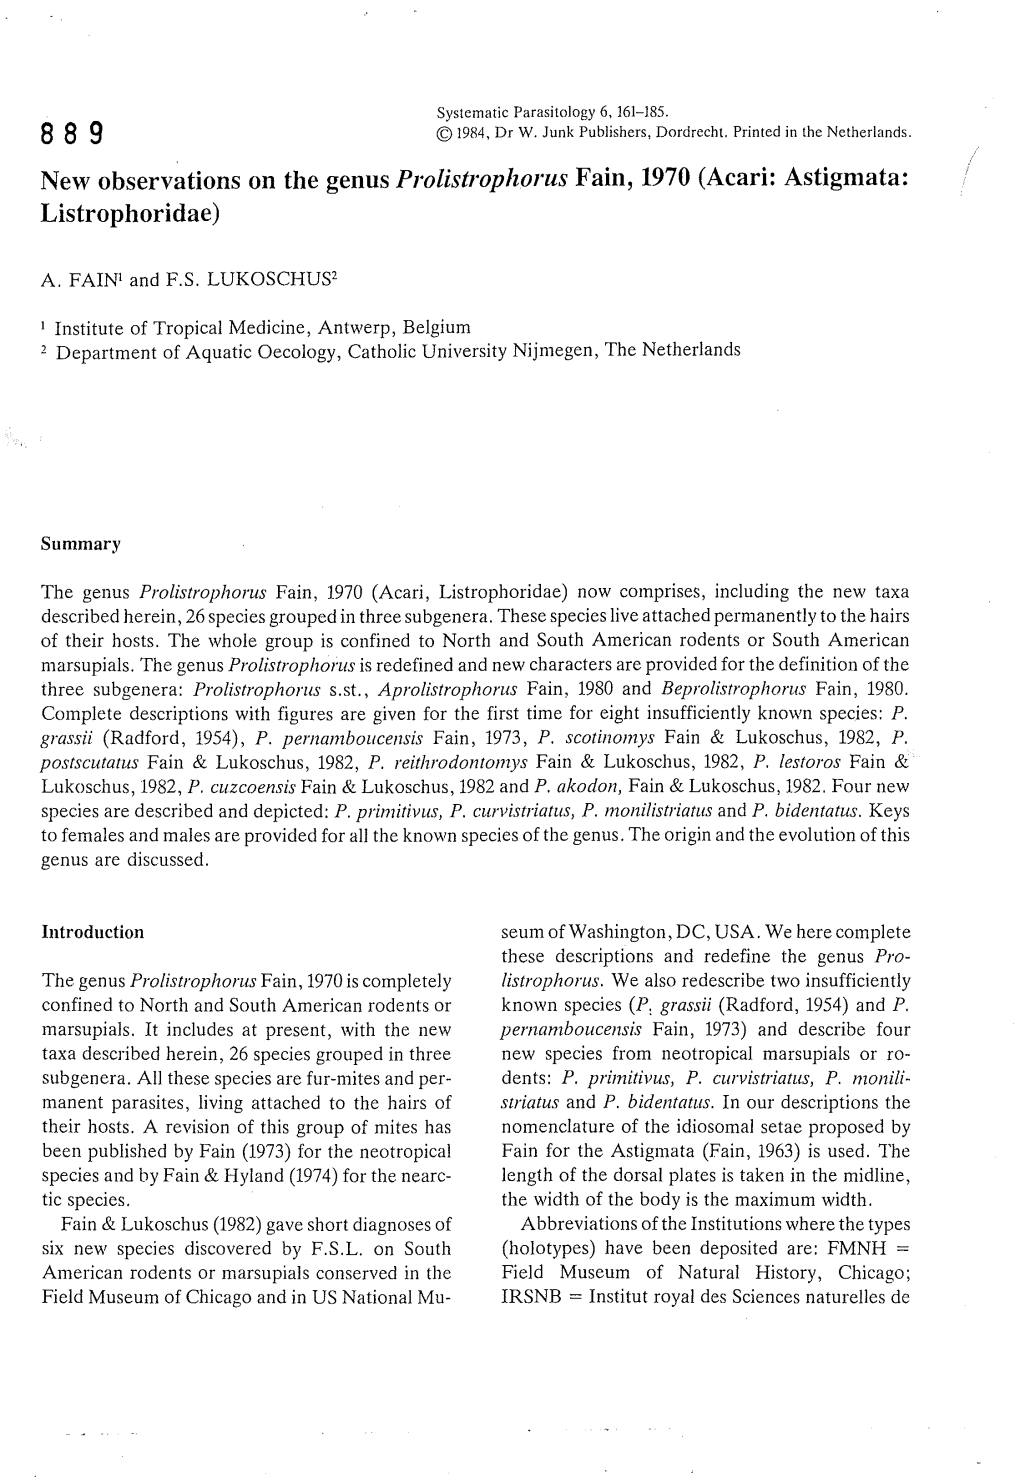 New Observations on the Genus Prolistrophorus Fain, 1970 (Acari: Astigmata: Listrophoridae)